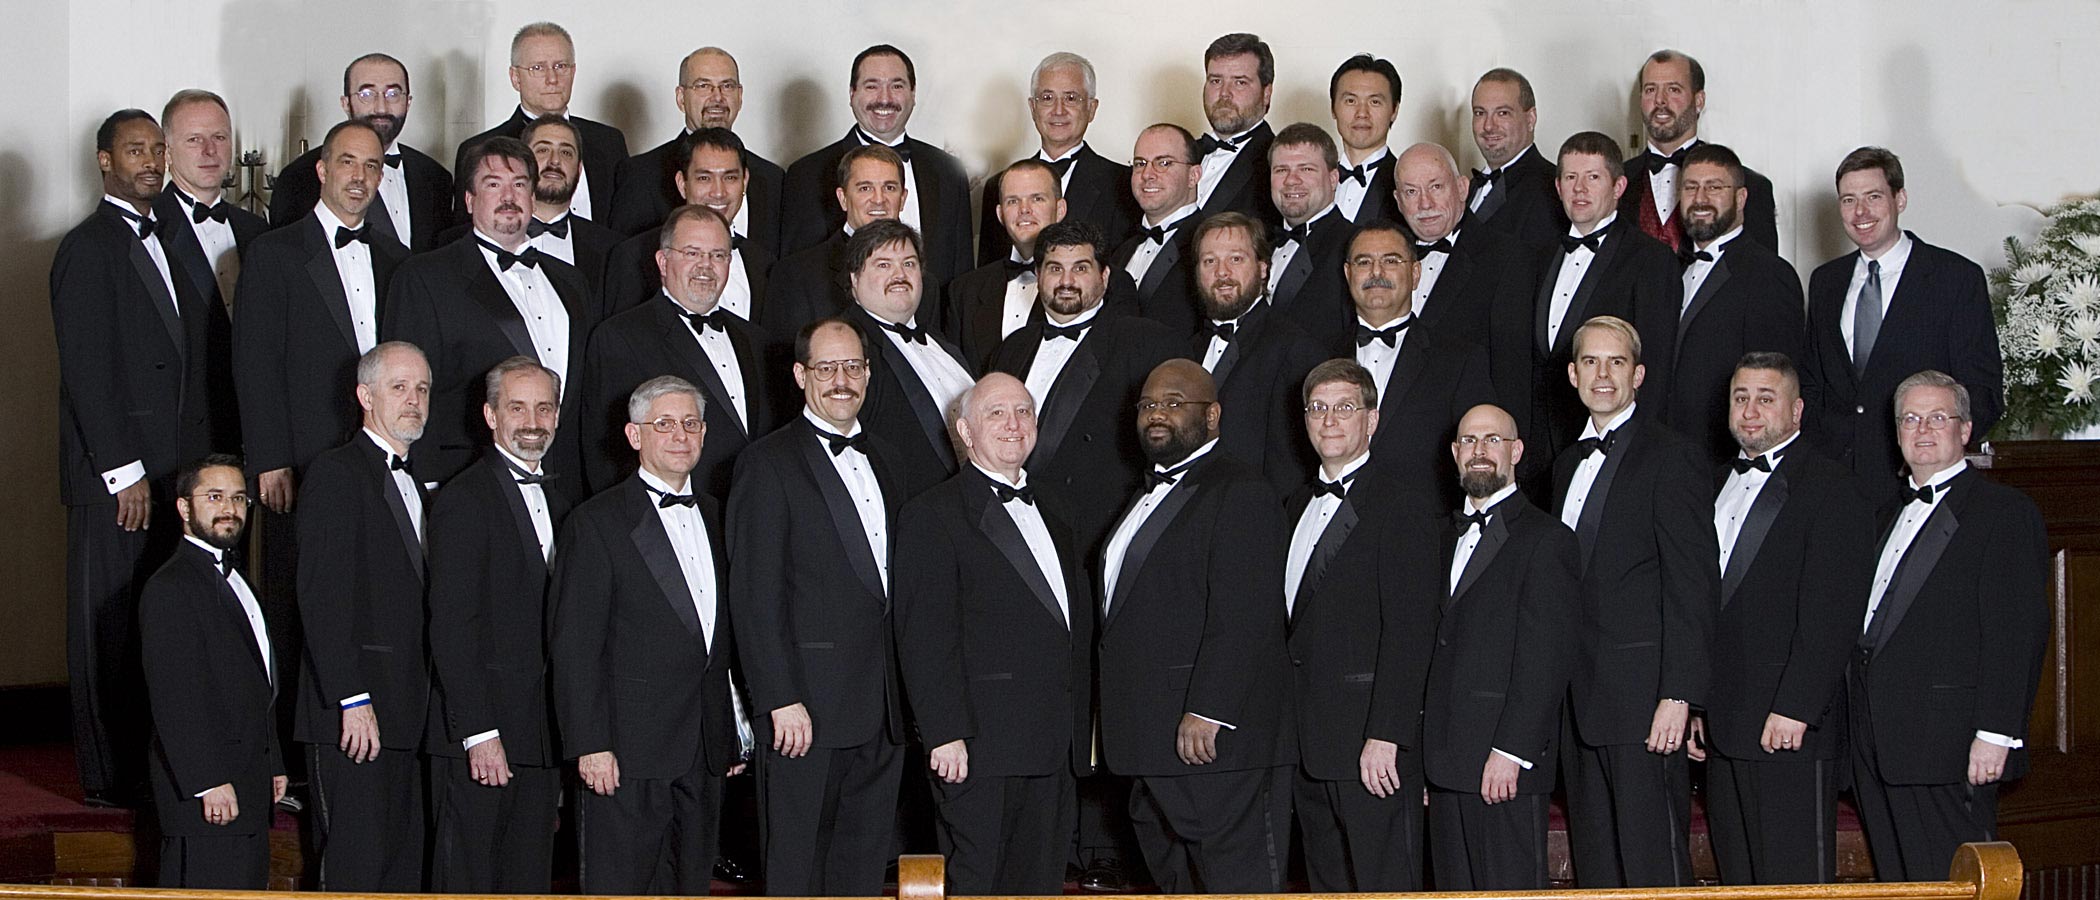 New Jersey Gay Men's Chorus - click to enlarge